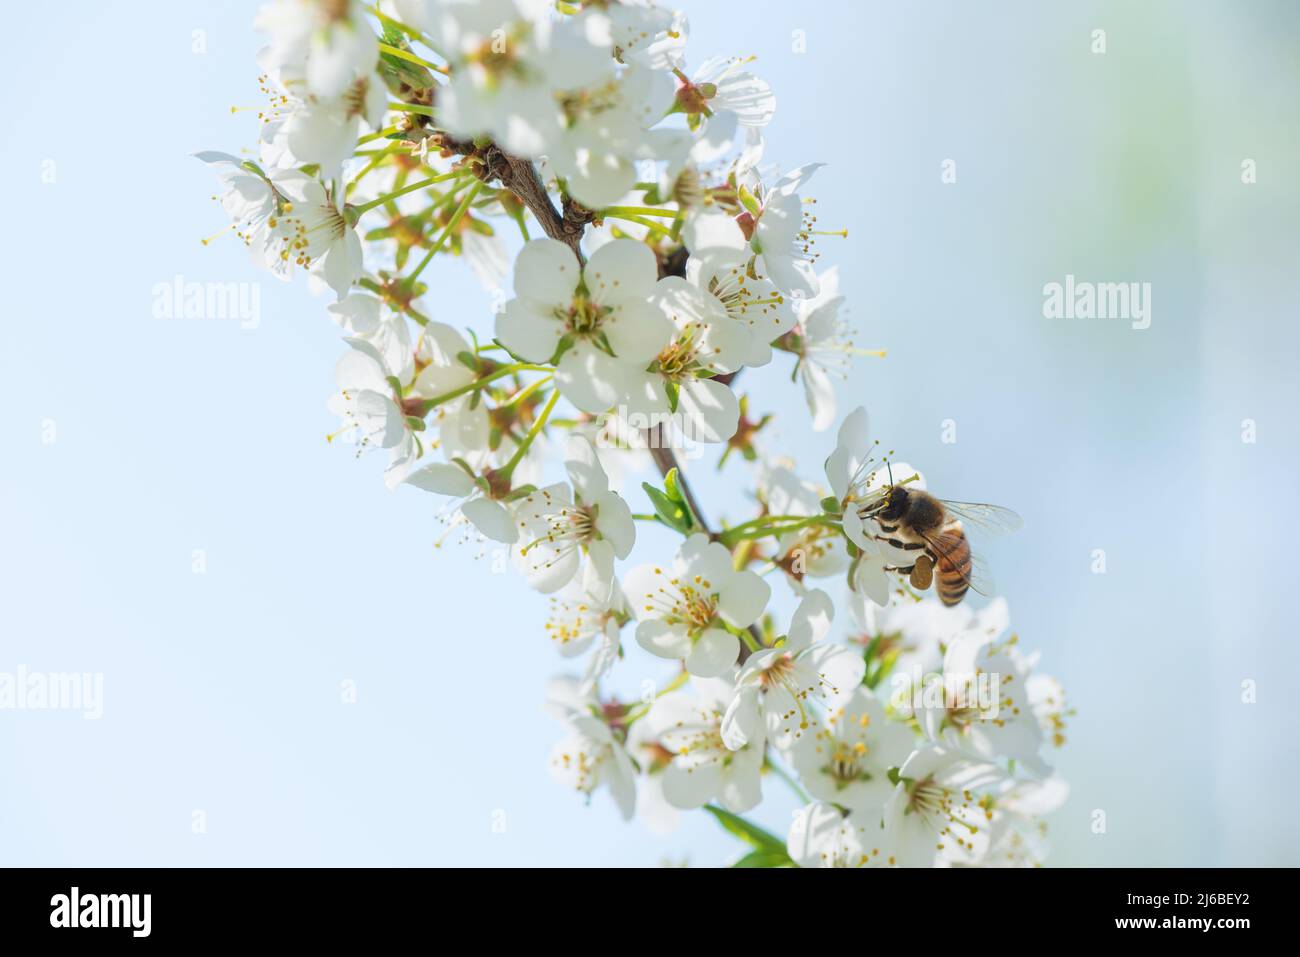 Domestic honeybee feeding nectar and pollinating Cherry plum or Myrobalan plum flowers. Blooming fruit tree in springtime. Stock Photo